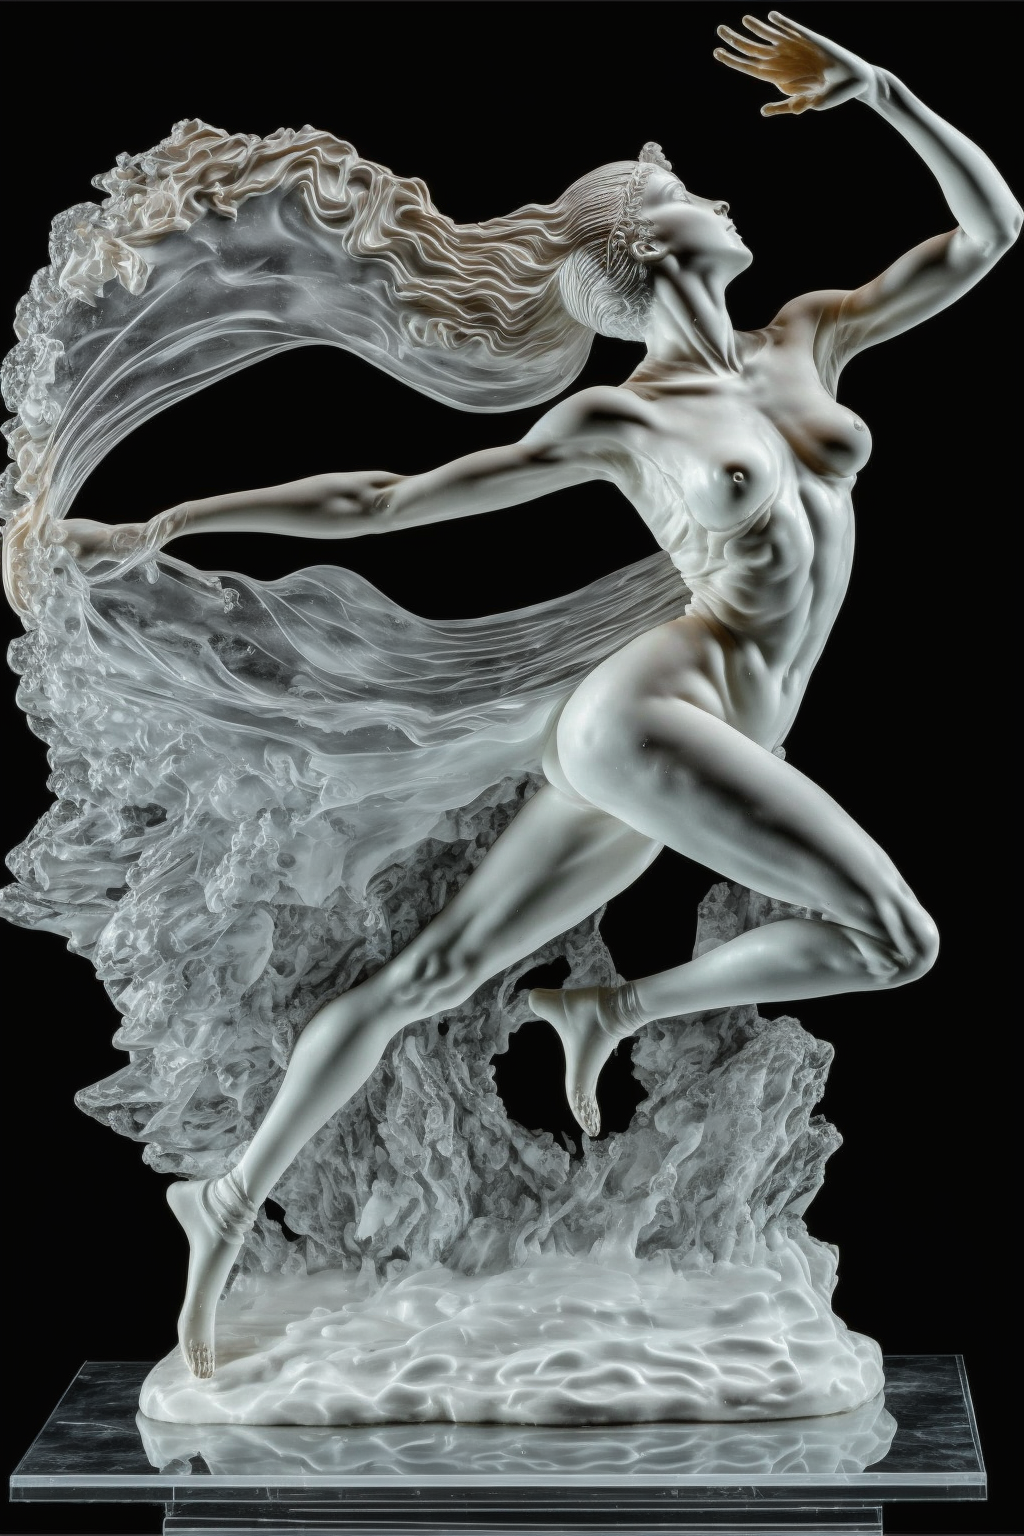 Sergey_Ku_iced_art_sculpture_of_beautiful_woman_in_dynamic_pose_c6de4335-8f76-4561-8c17-fffdd6...png